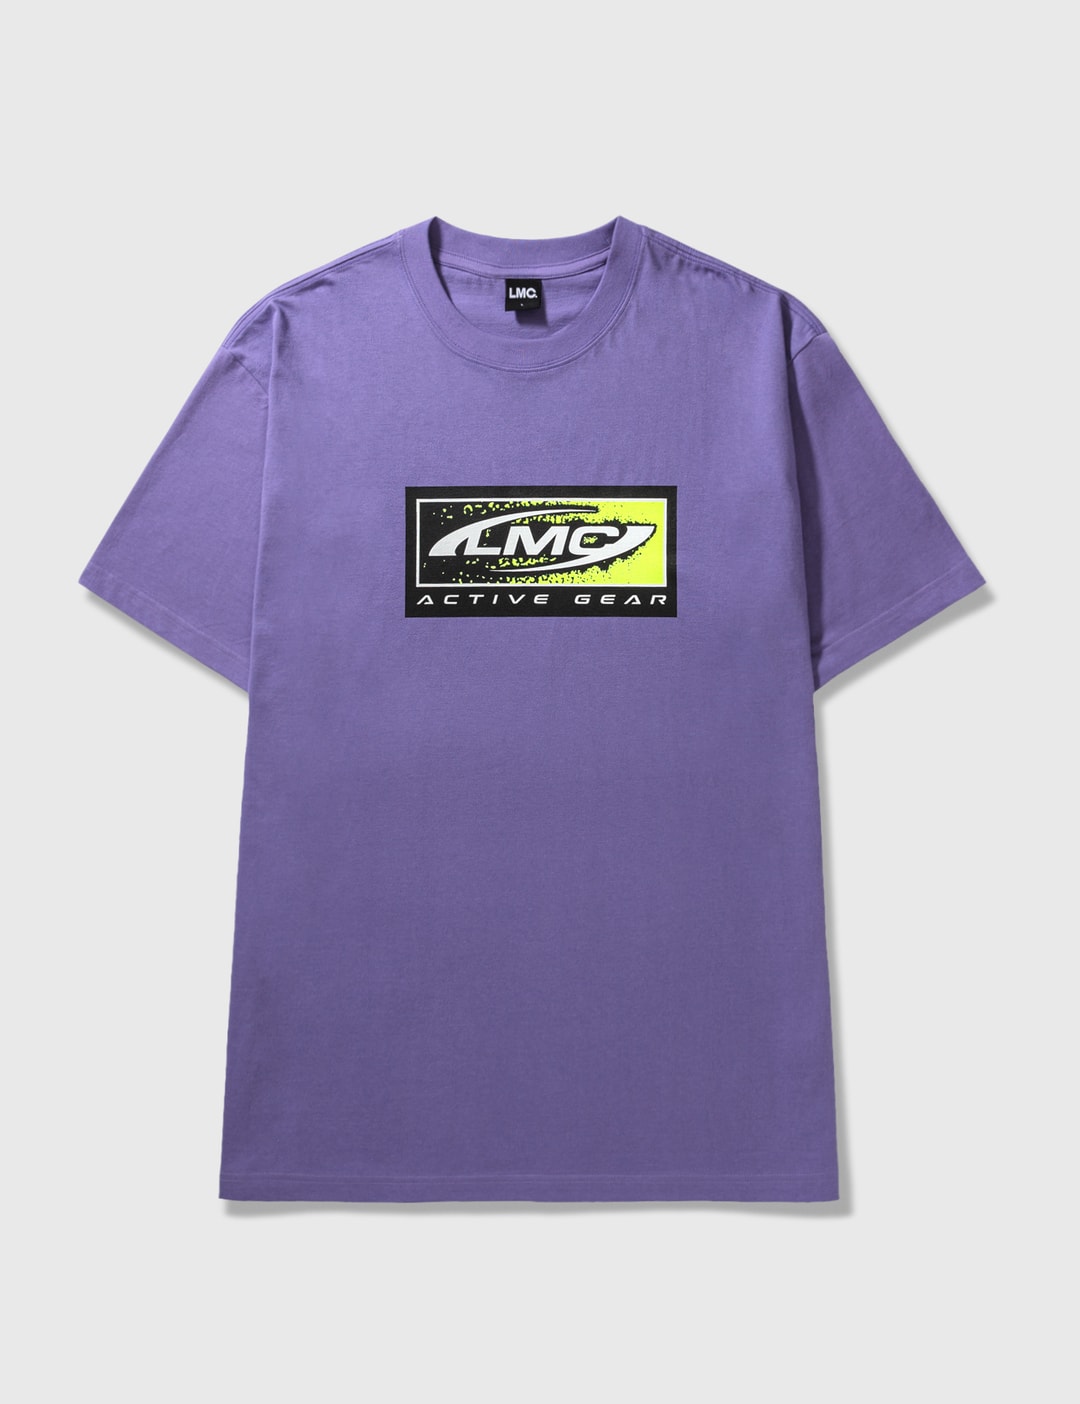 LMC - LMC Box Active Gear T-shirt | HBX - Globally Curated Fashion and ...